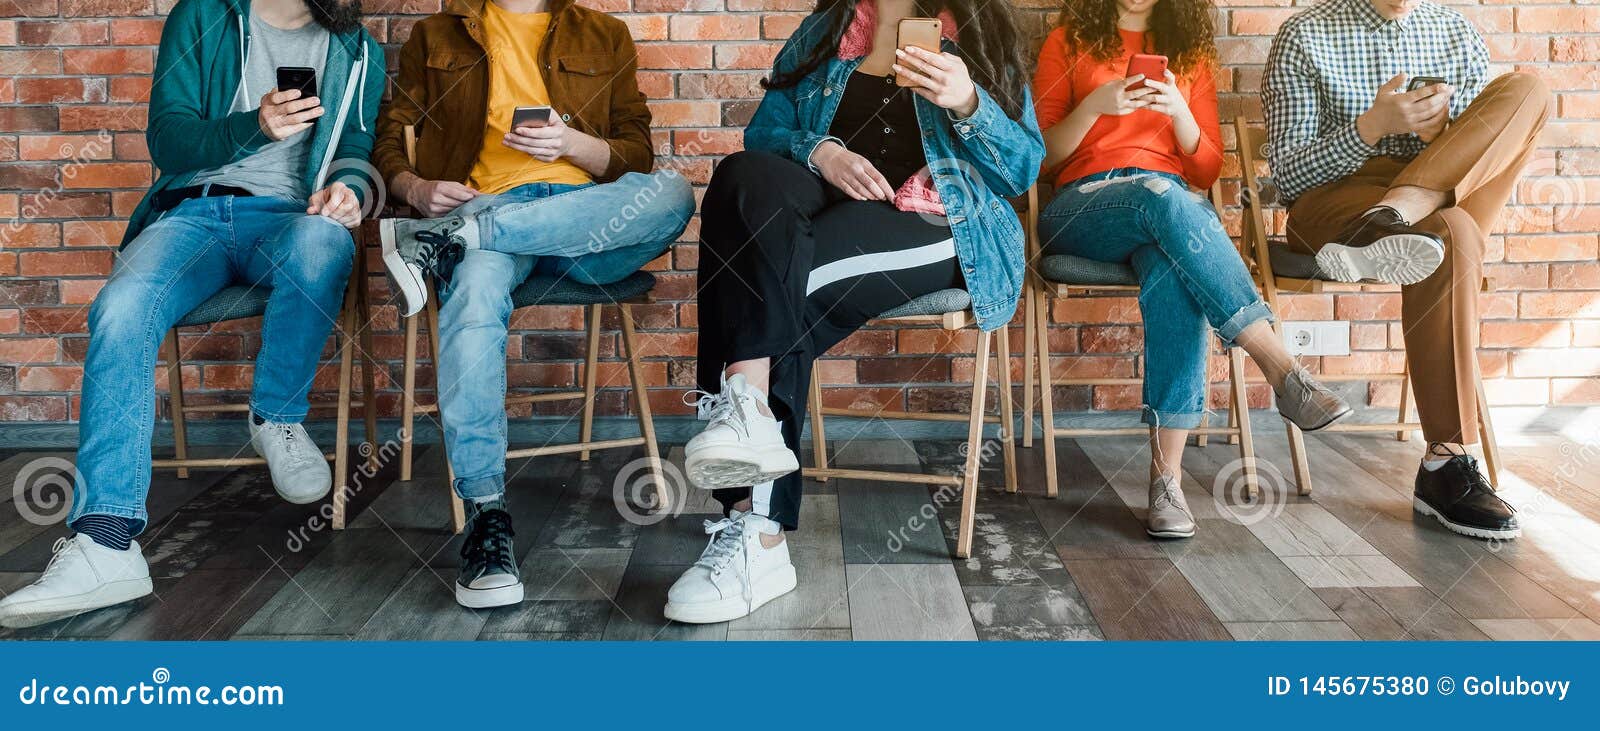 millennials modern social media addiction